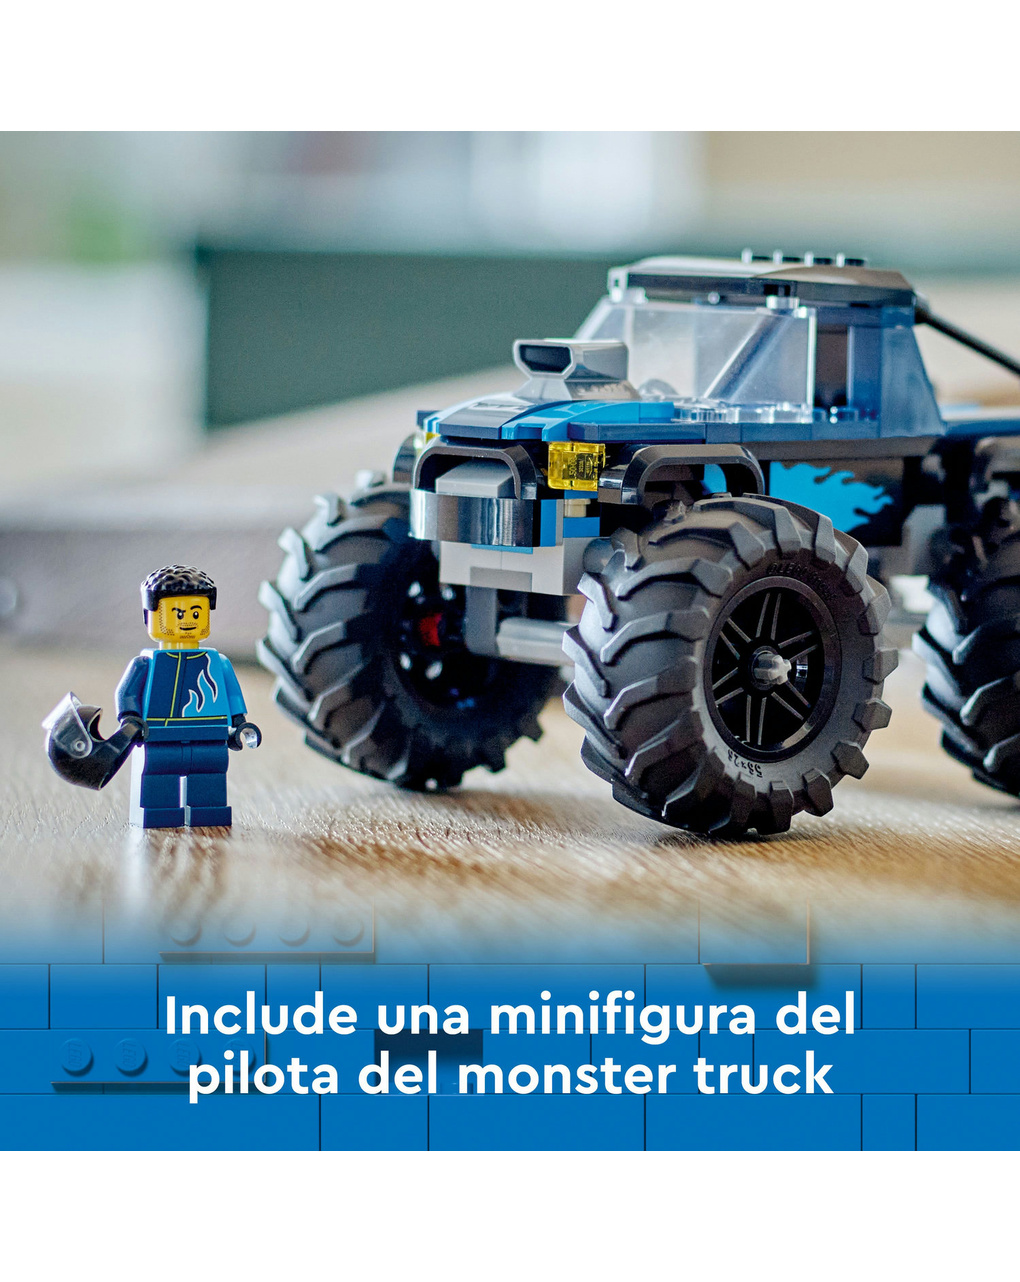 Monster truck azul - 60402 - lego city - LEGO